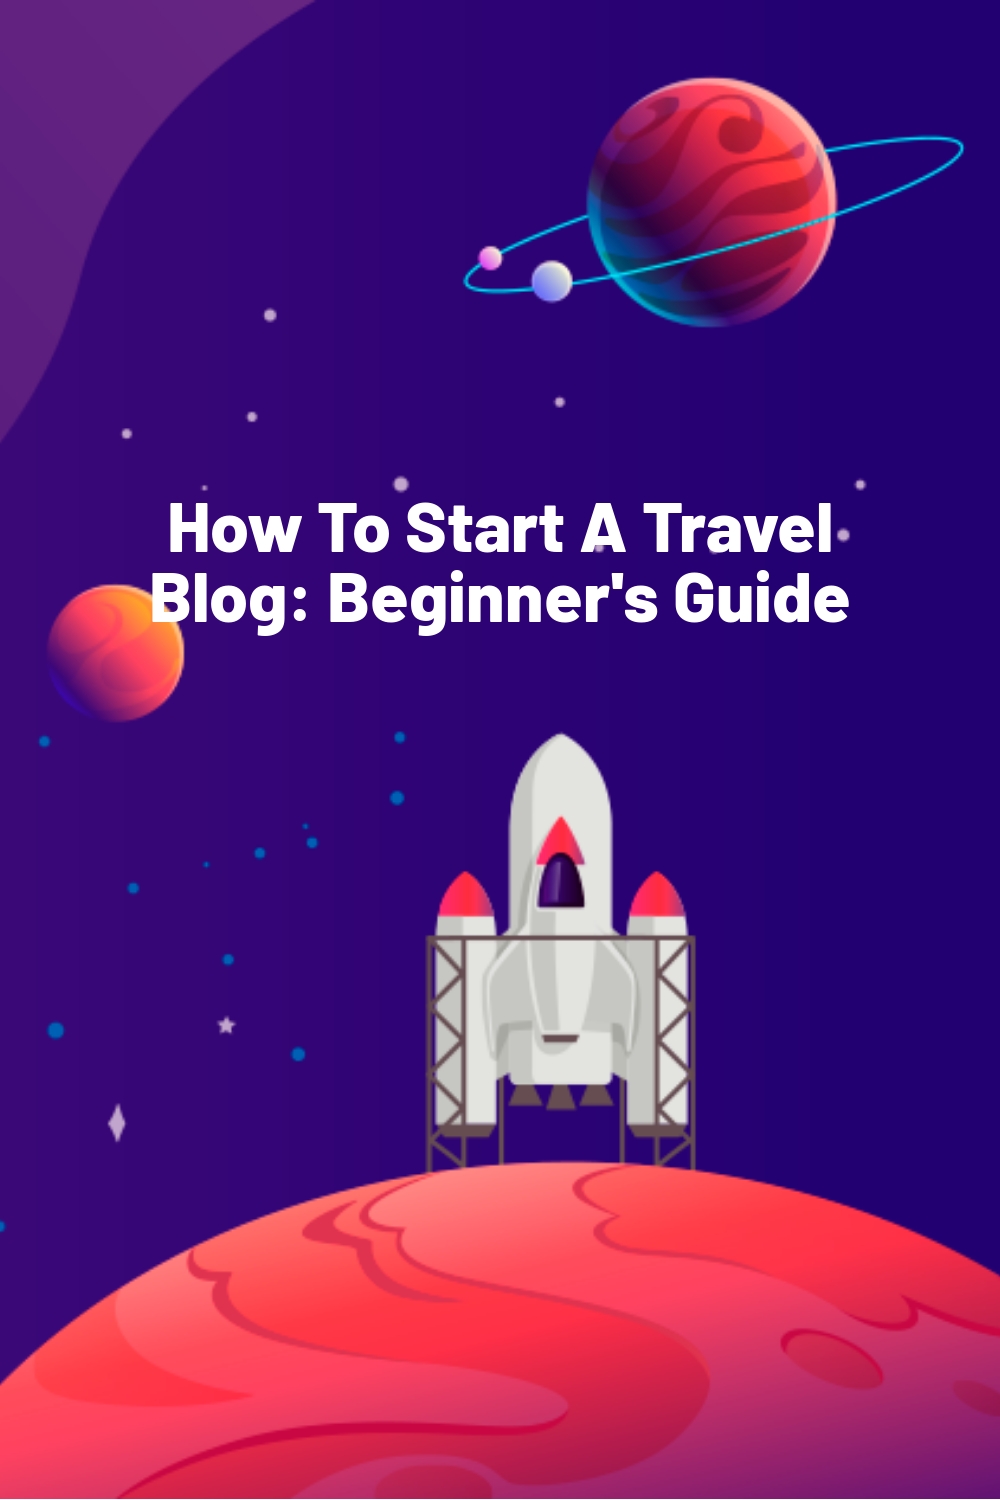 How To Start A Travel Blog: Beginner’s Guide